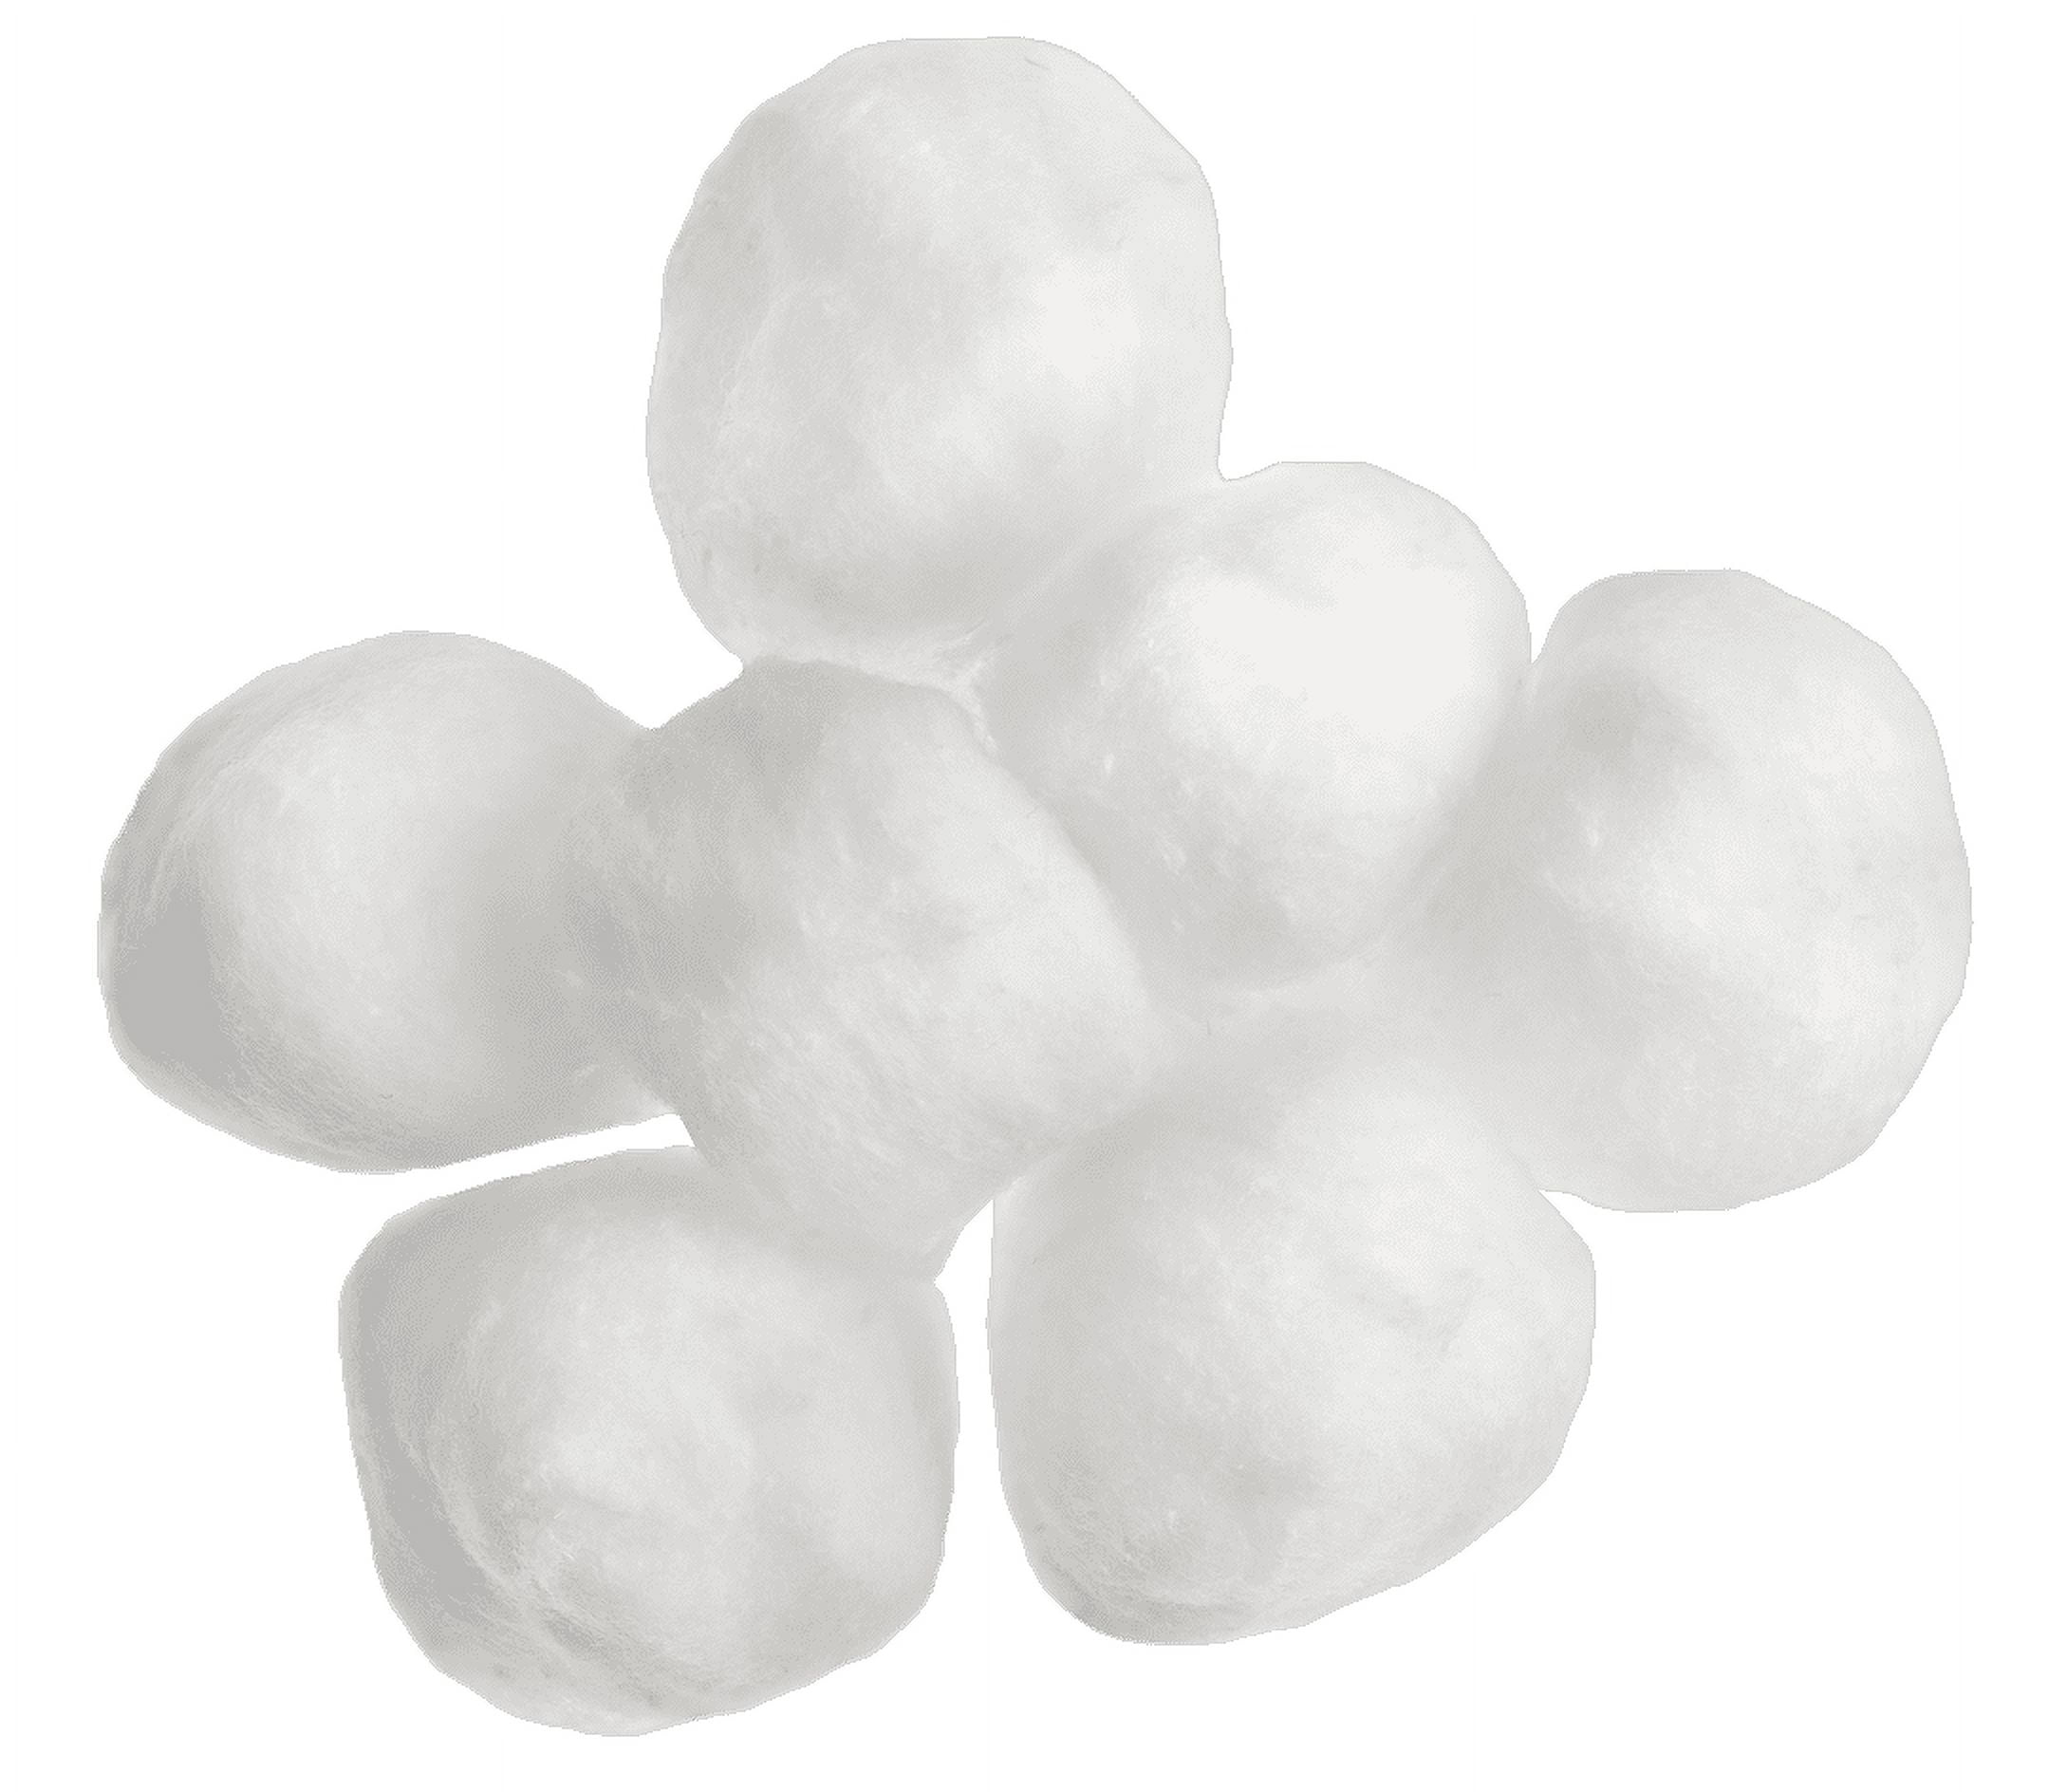 Swisspers Large Cotton Balls - Westside Beauty